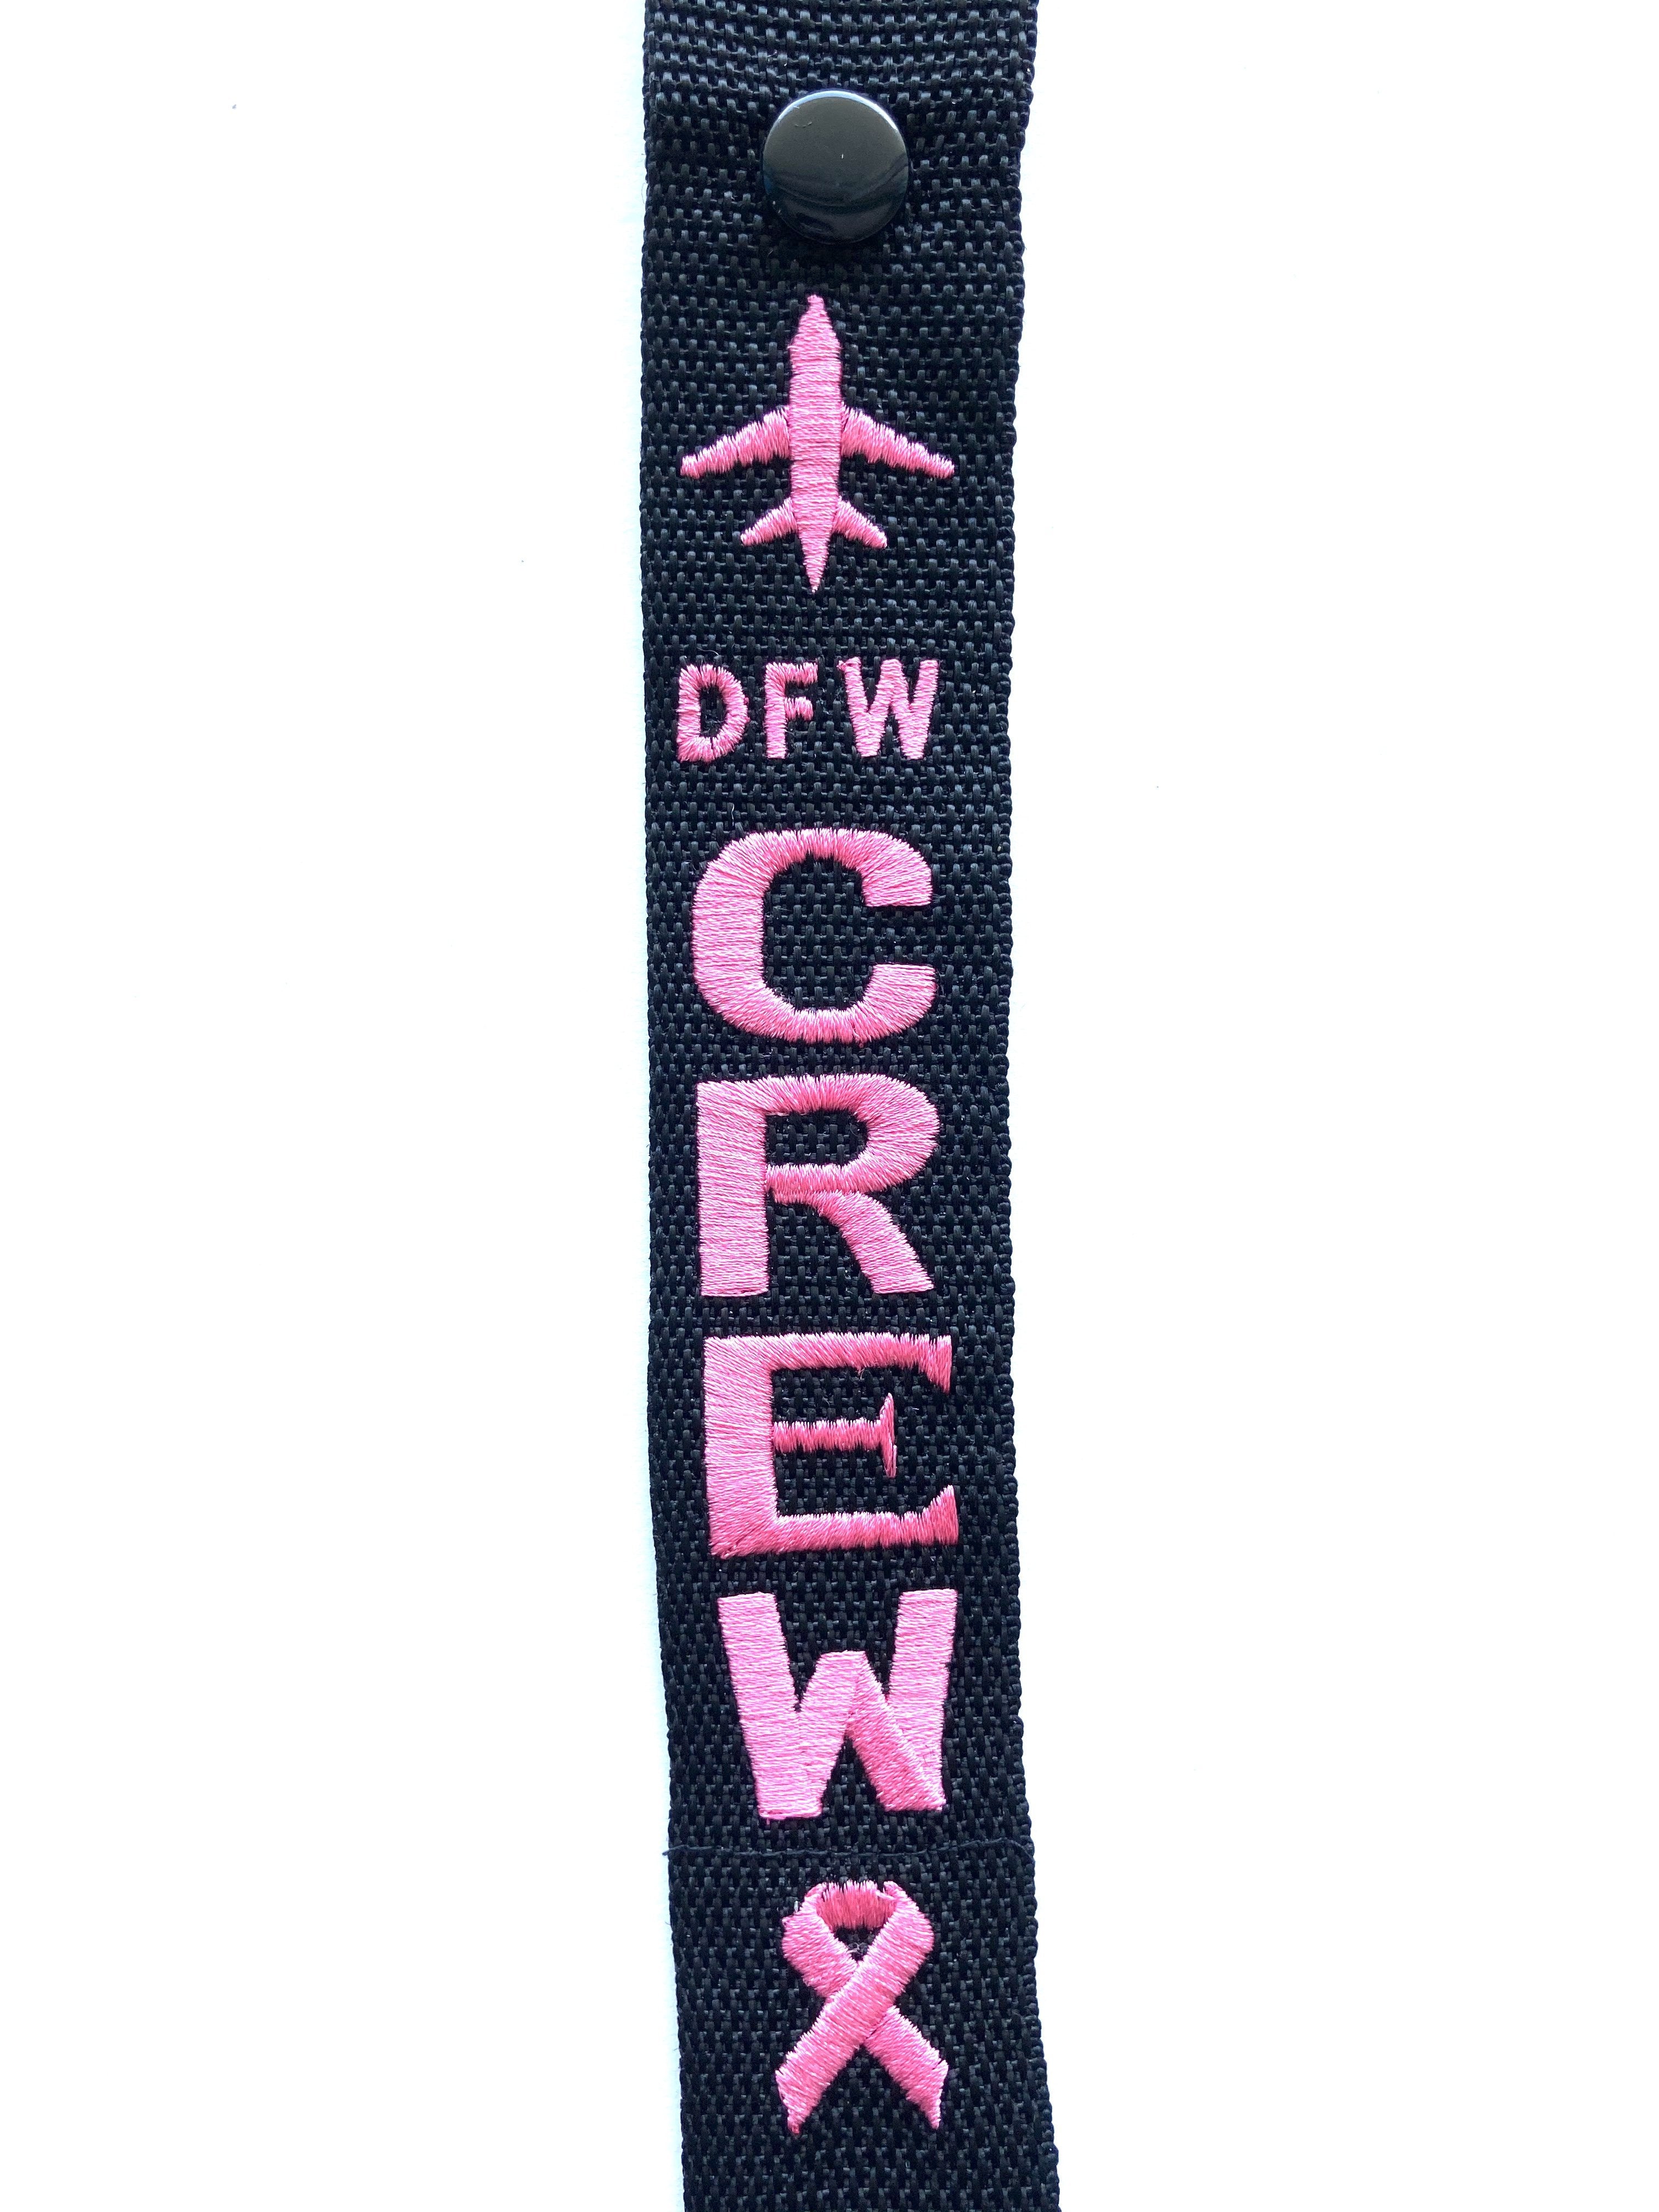 CREW Luggage Tag - DFW Pink &